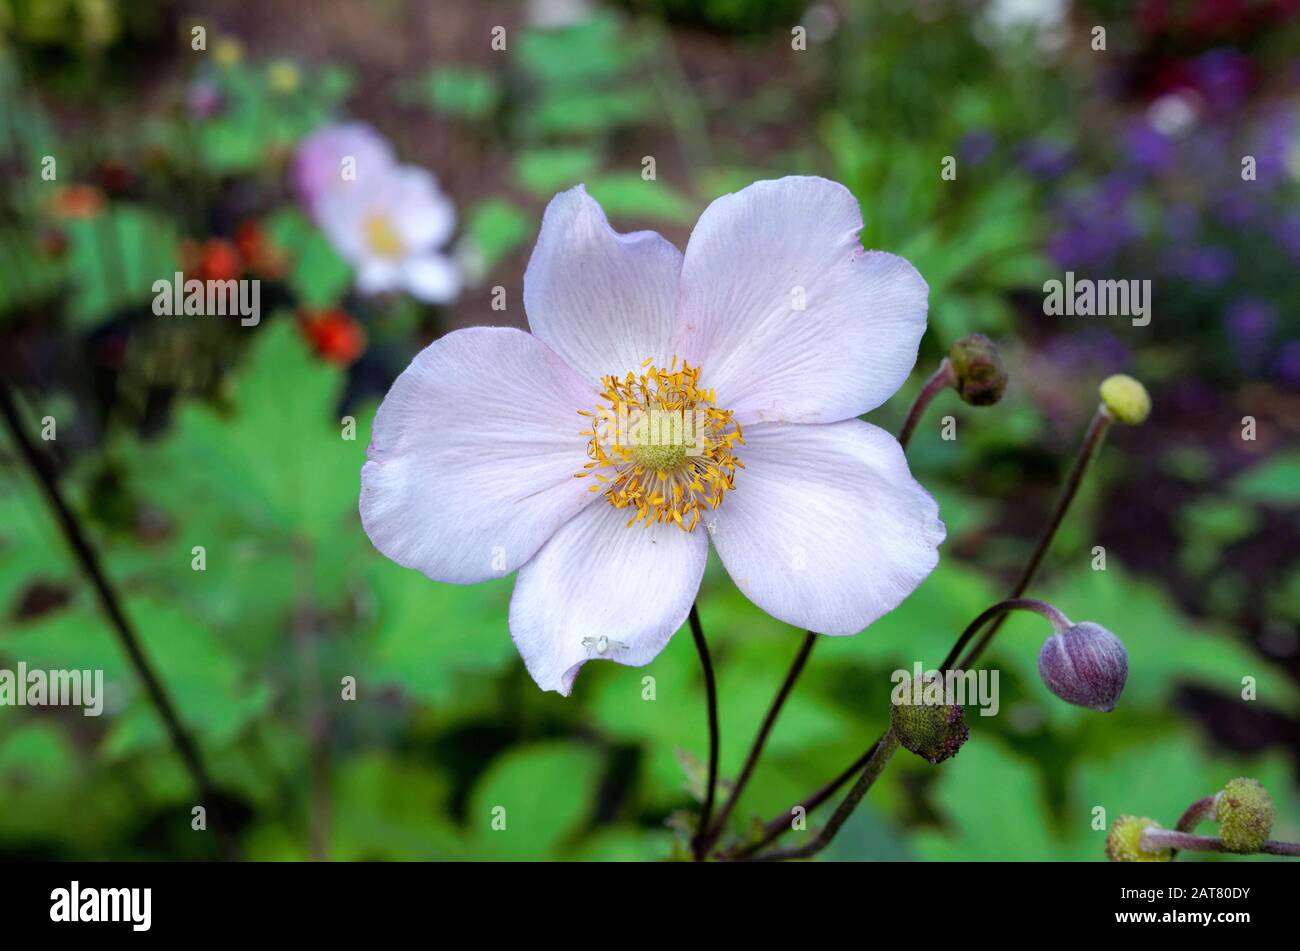 Windflower `Anemone hupehensis´ against blurred green background Stock Photo